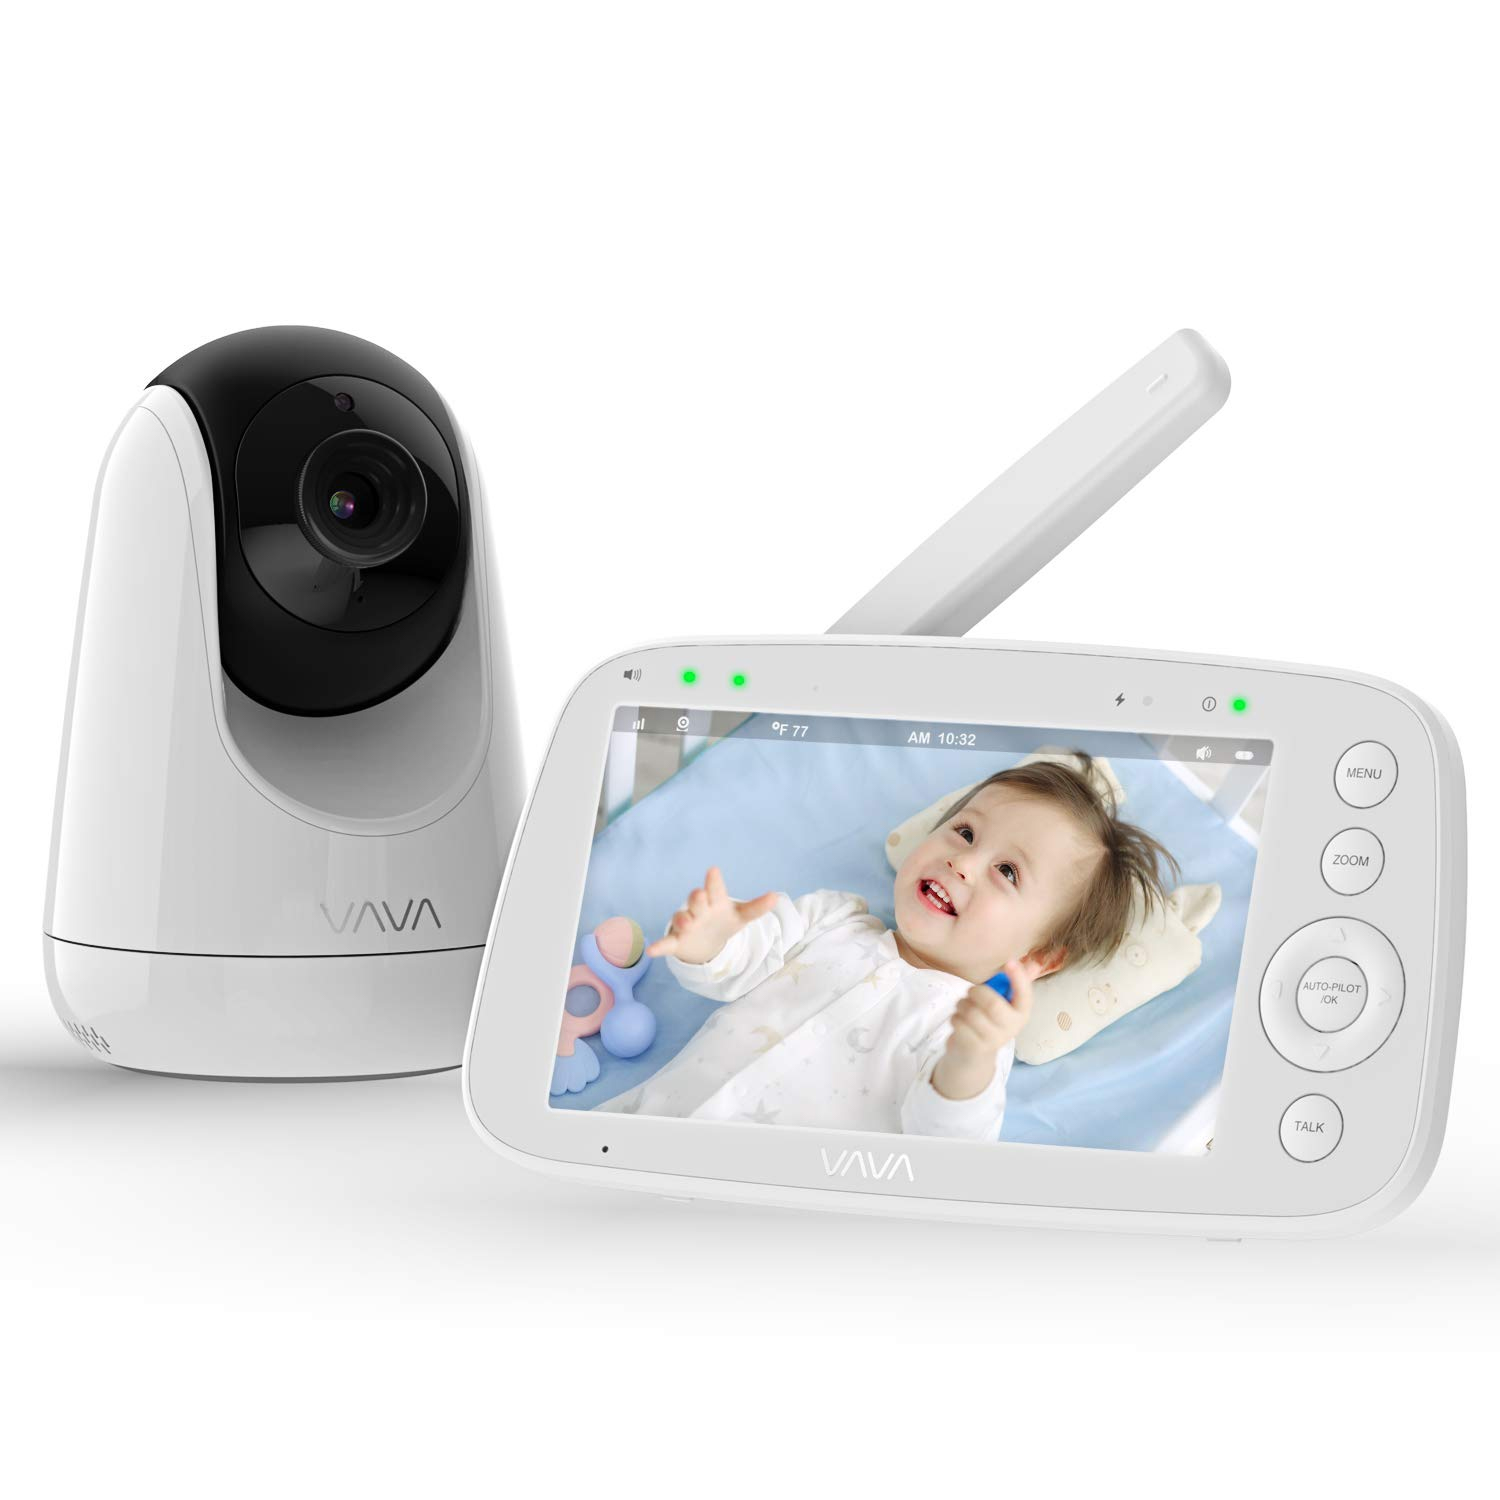 Monitor　VAVA　2-Way　Screen　Video　Handheld　5-Inch　Baby　720P　with　and　Audio,　White